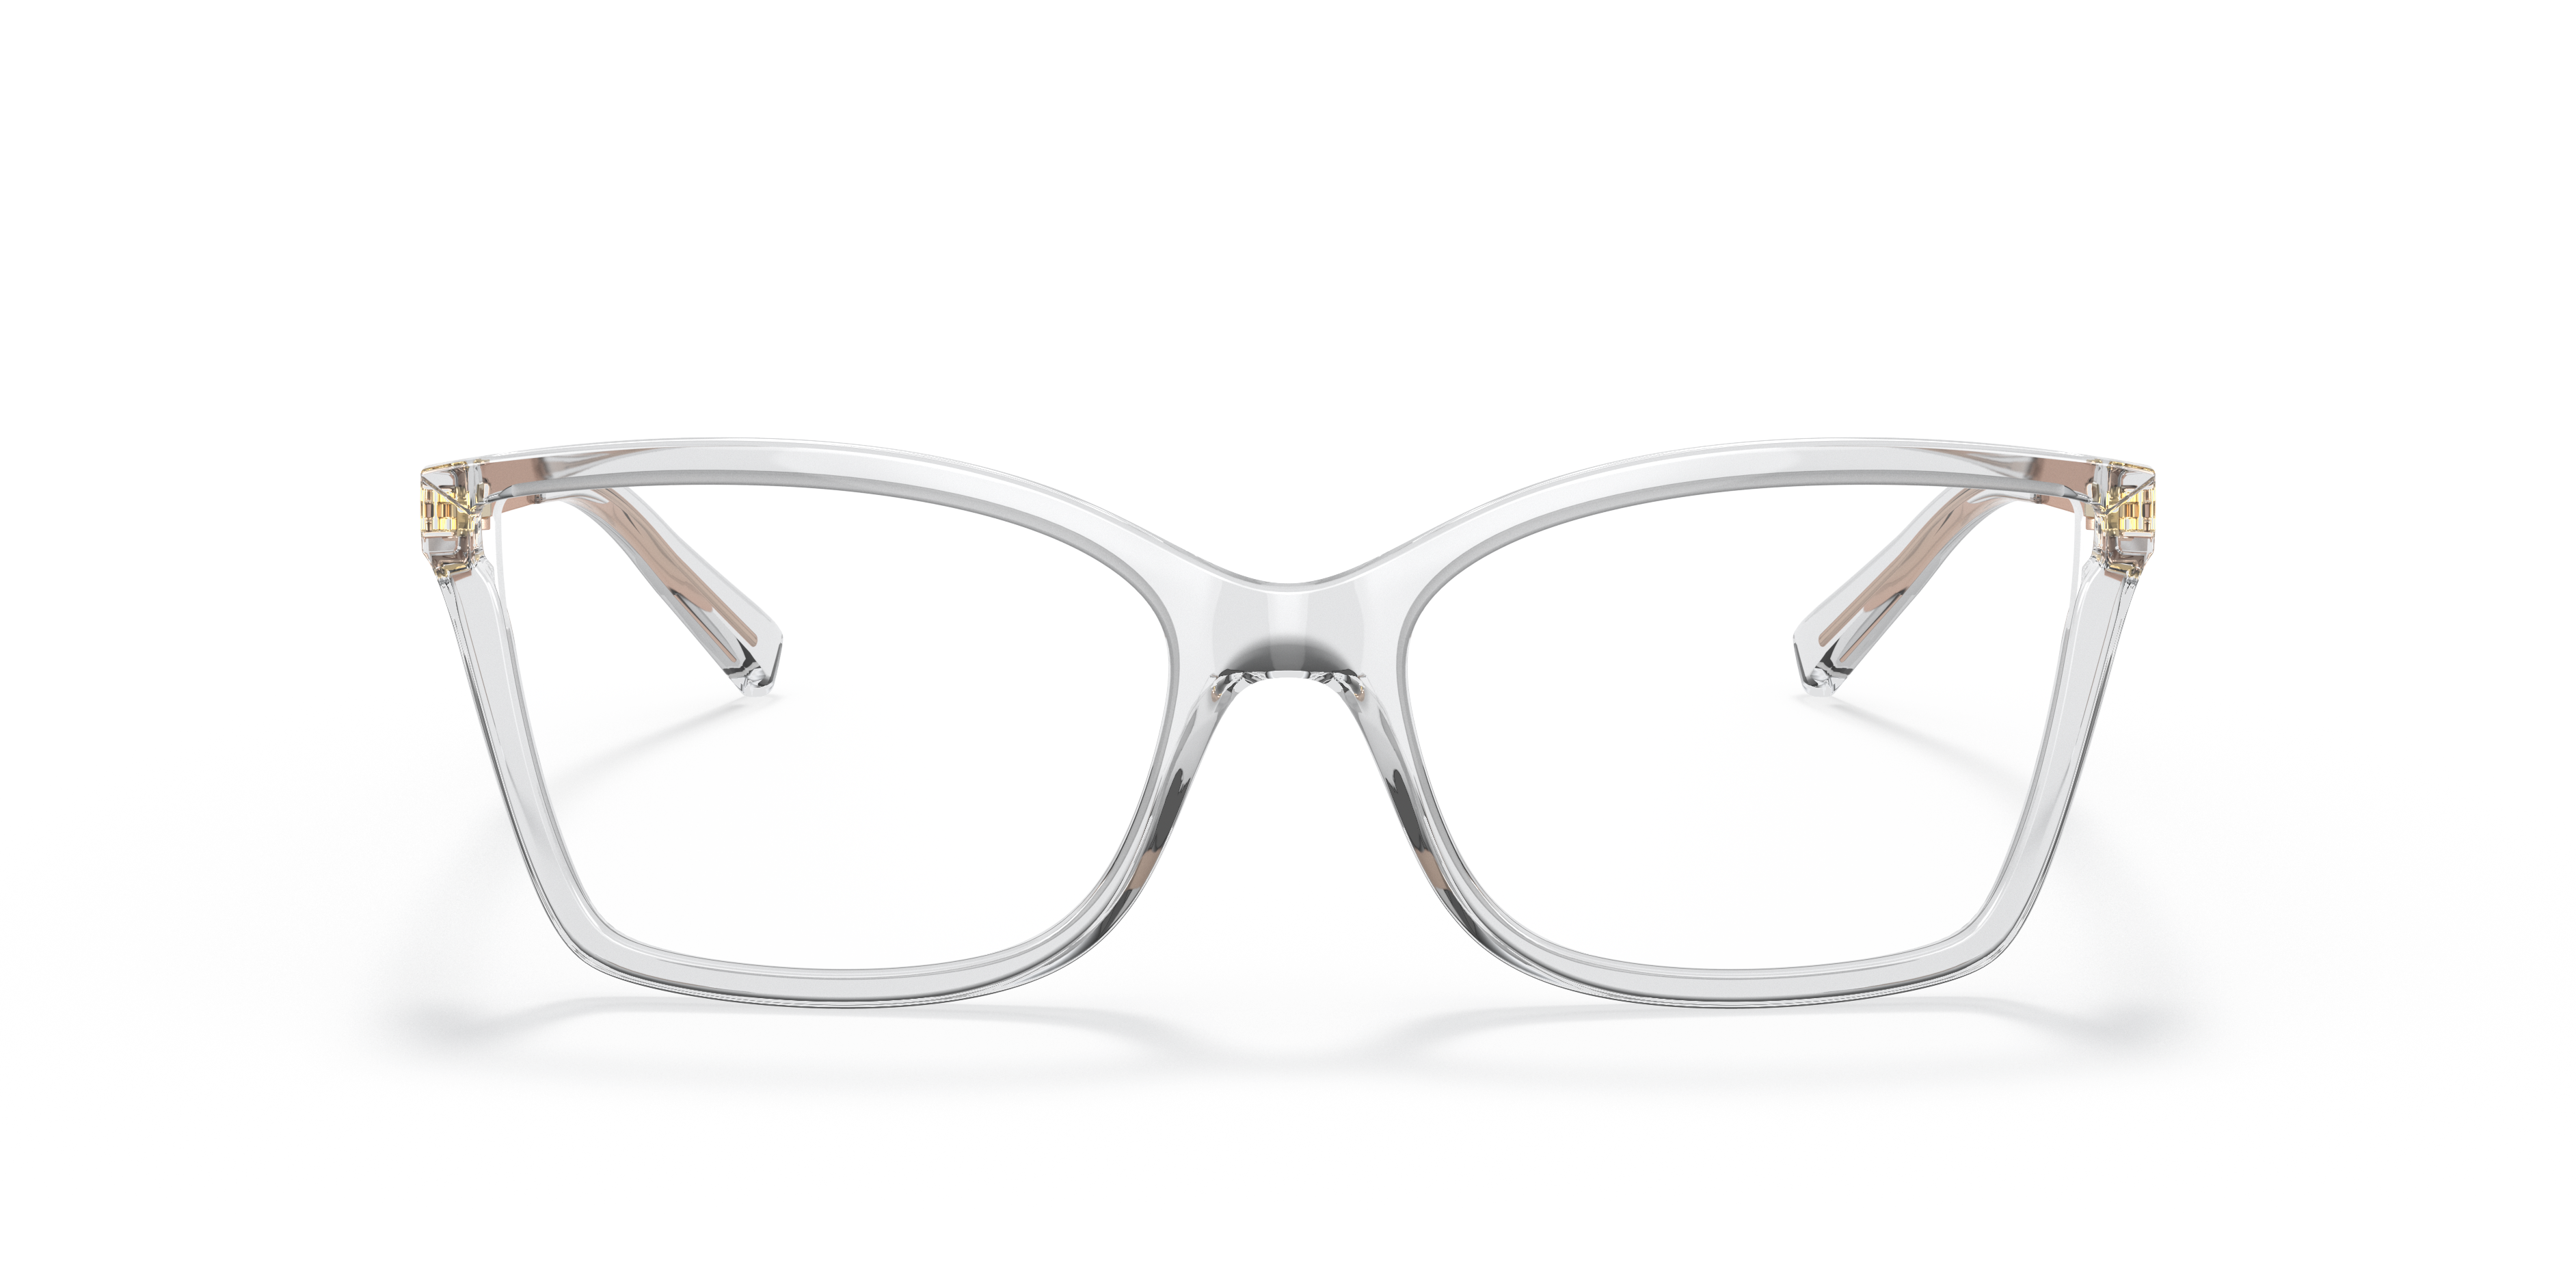 Michael Kors Sunglasses Oakville And Mississauga  Invision Optical